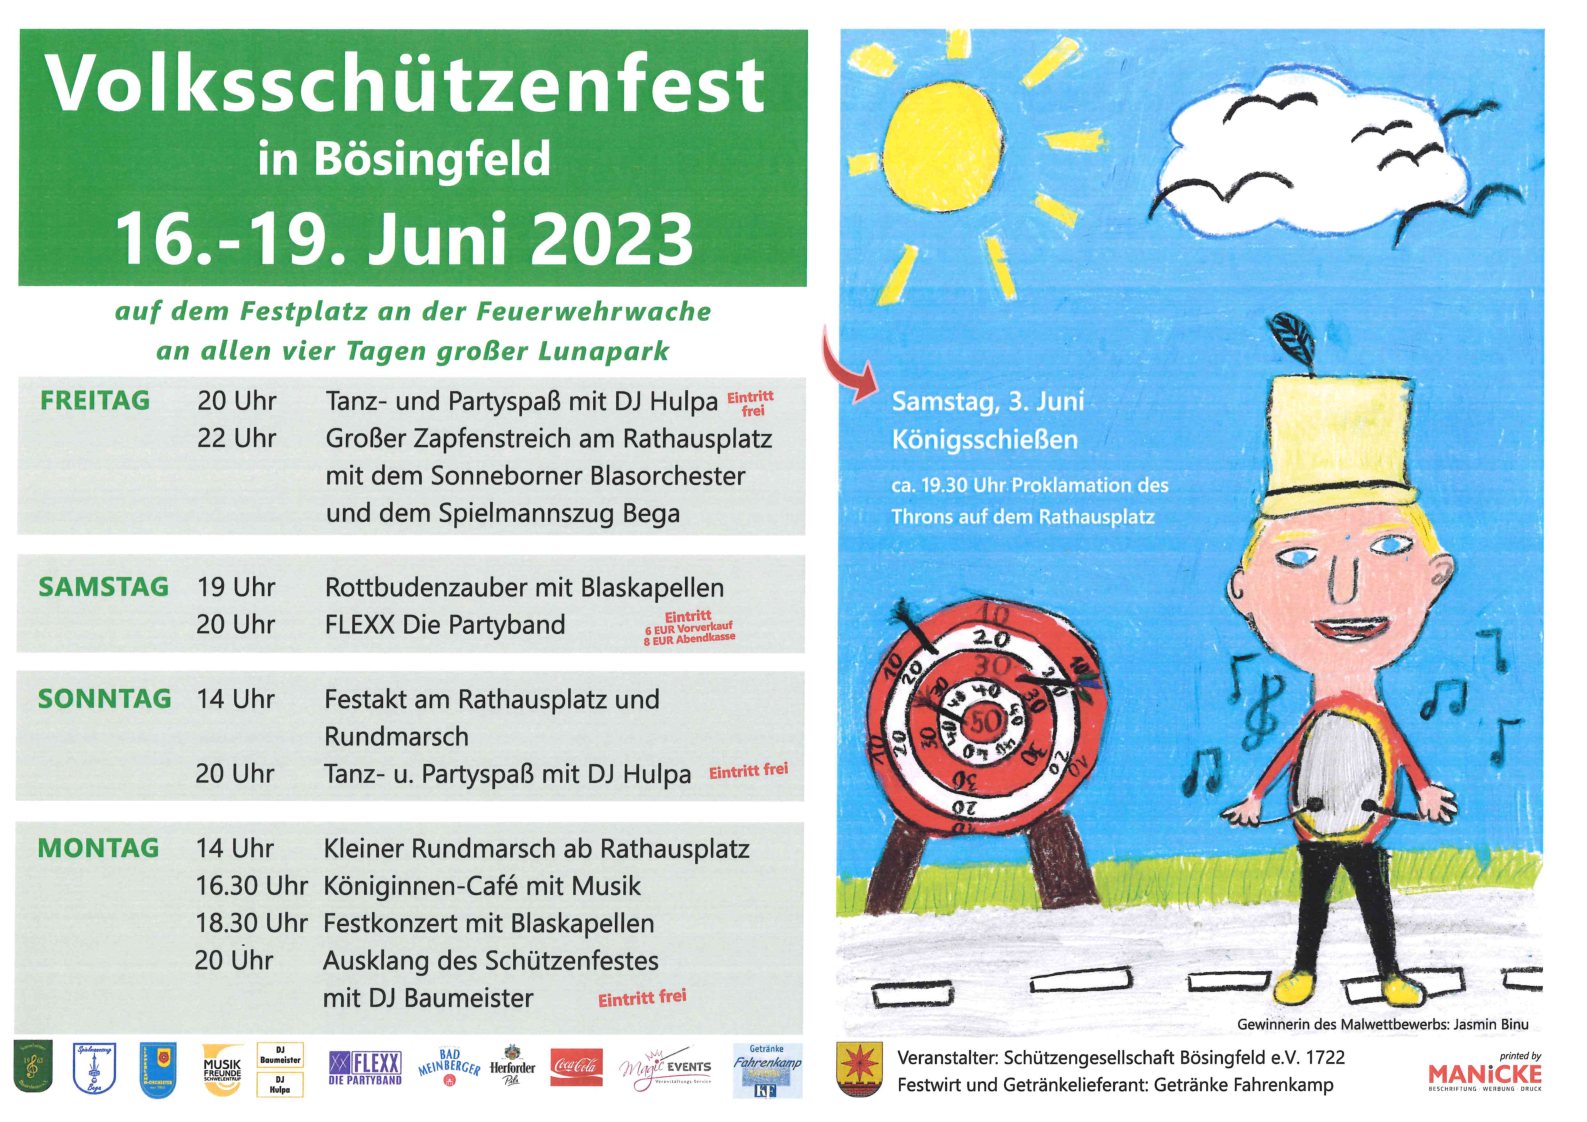 Volksschützenfest in Bösingfeld 16. - 19. Juni 2023